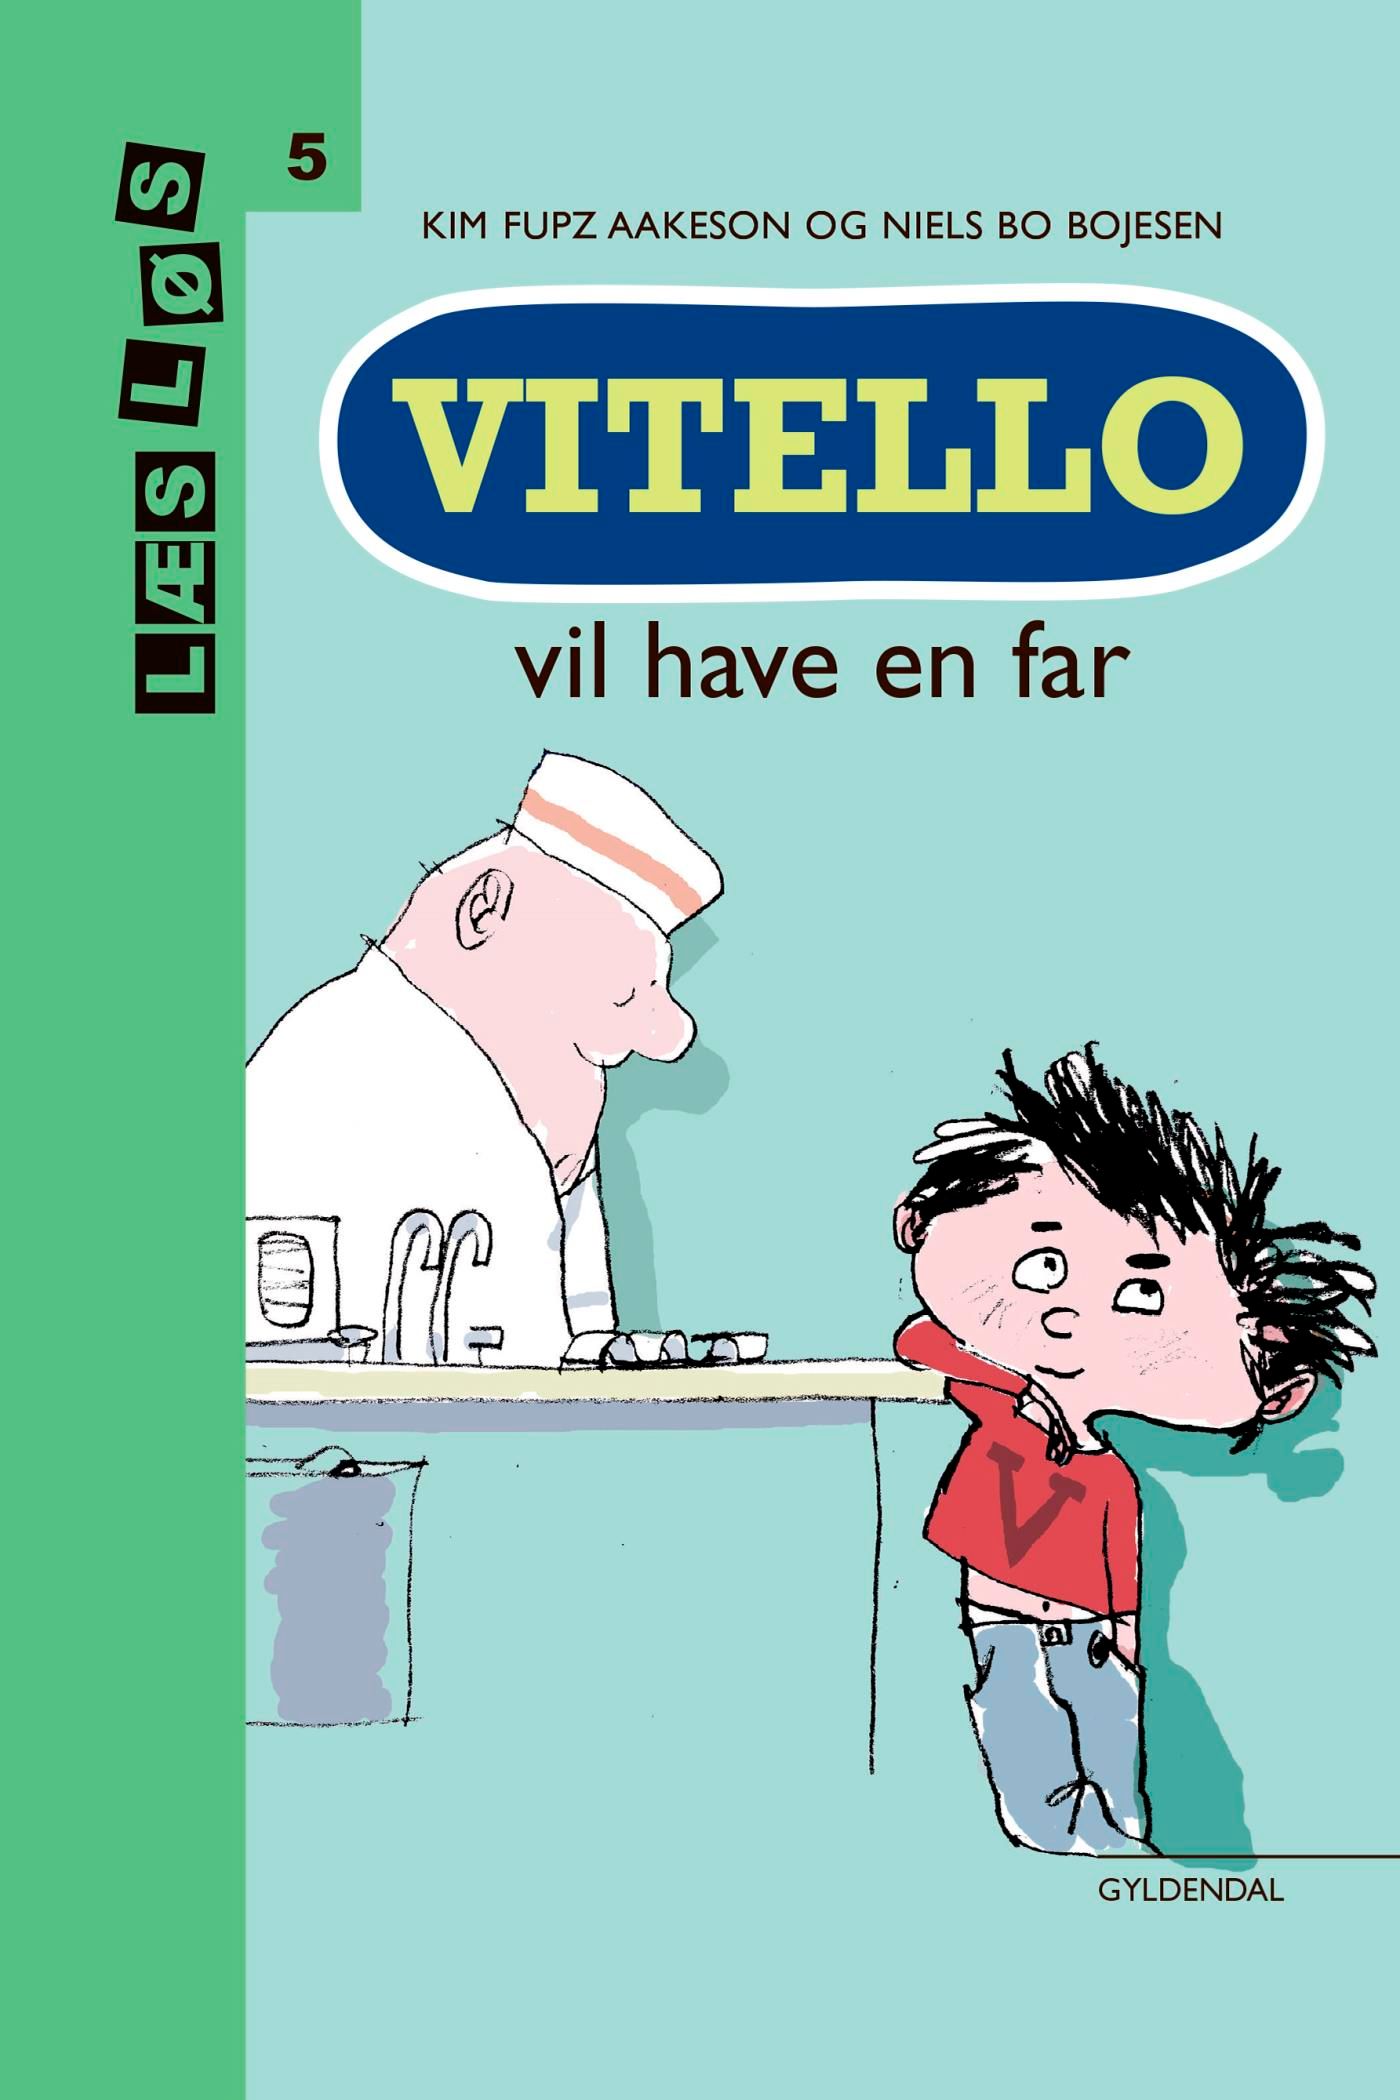 Vitello vil have en far, eBook by Kim Fupz Aakeson